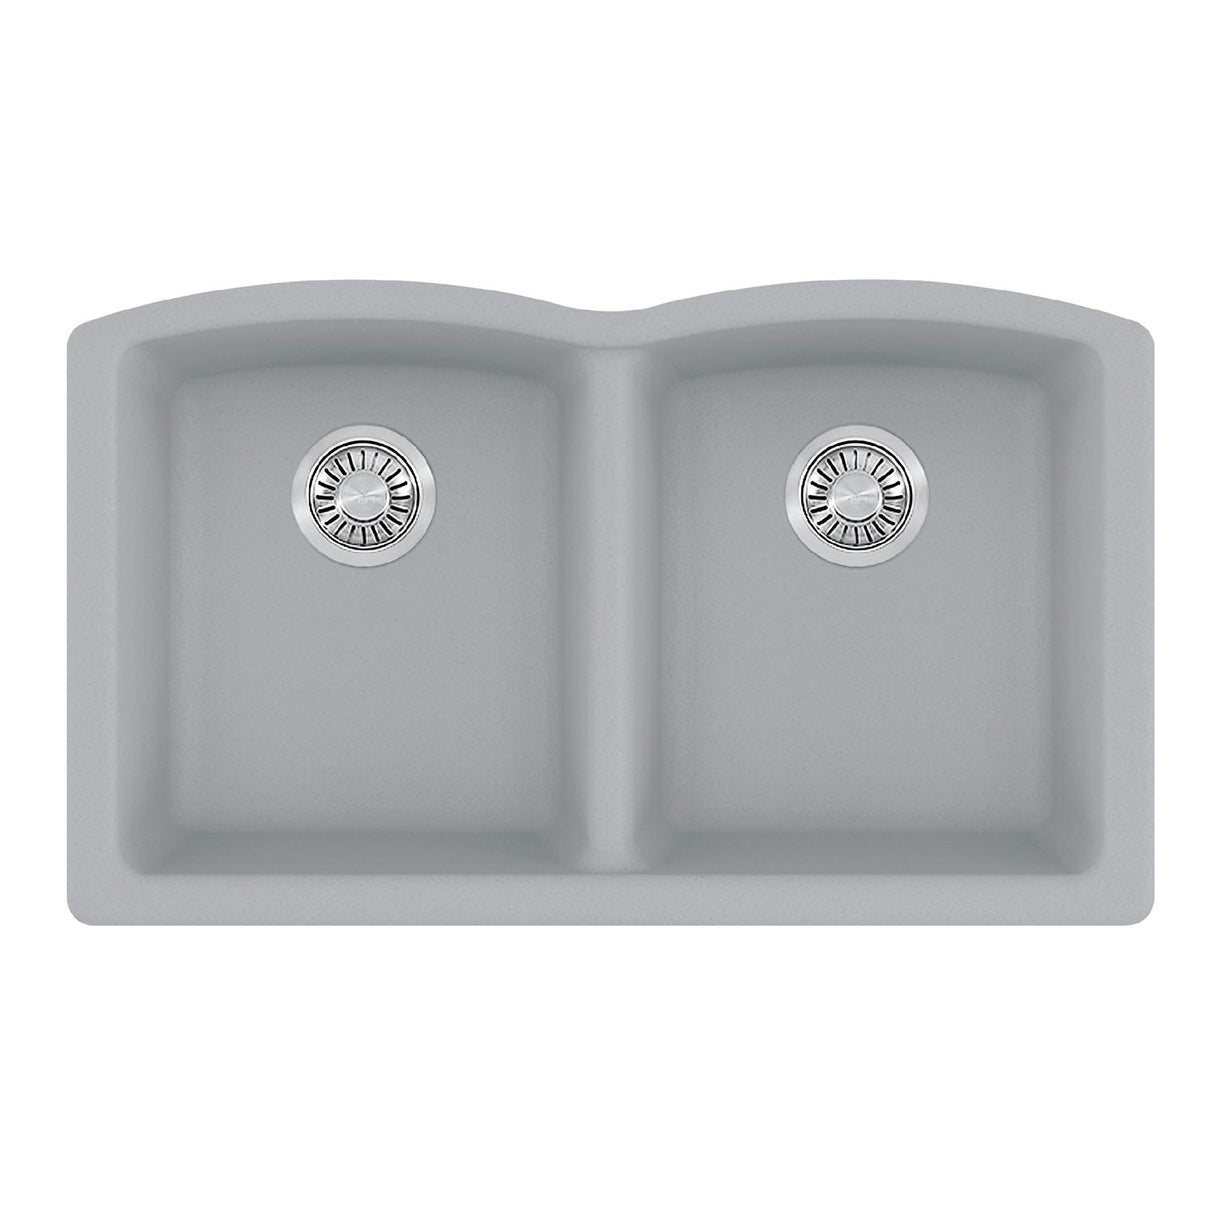 FRANKE ELG120SHG Ellipse 33.0-in. x 19.7-in. Stone Grey Granite Undermount Double Bowl Kitchen Sink - ELG120OSHG In Stone Grey